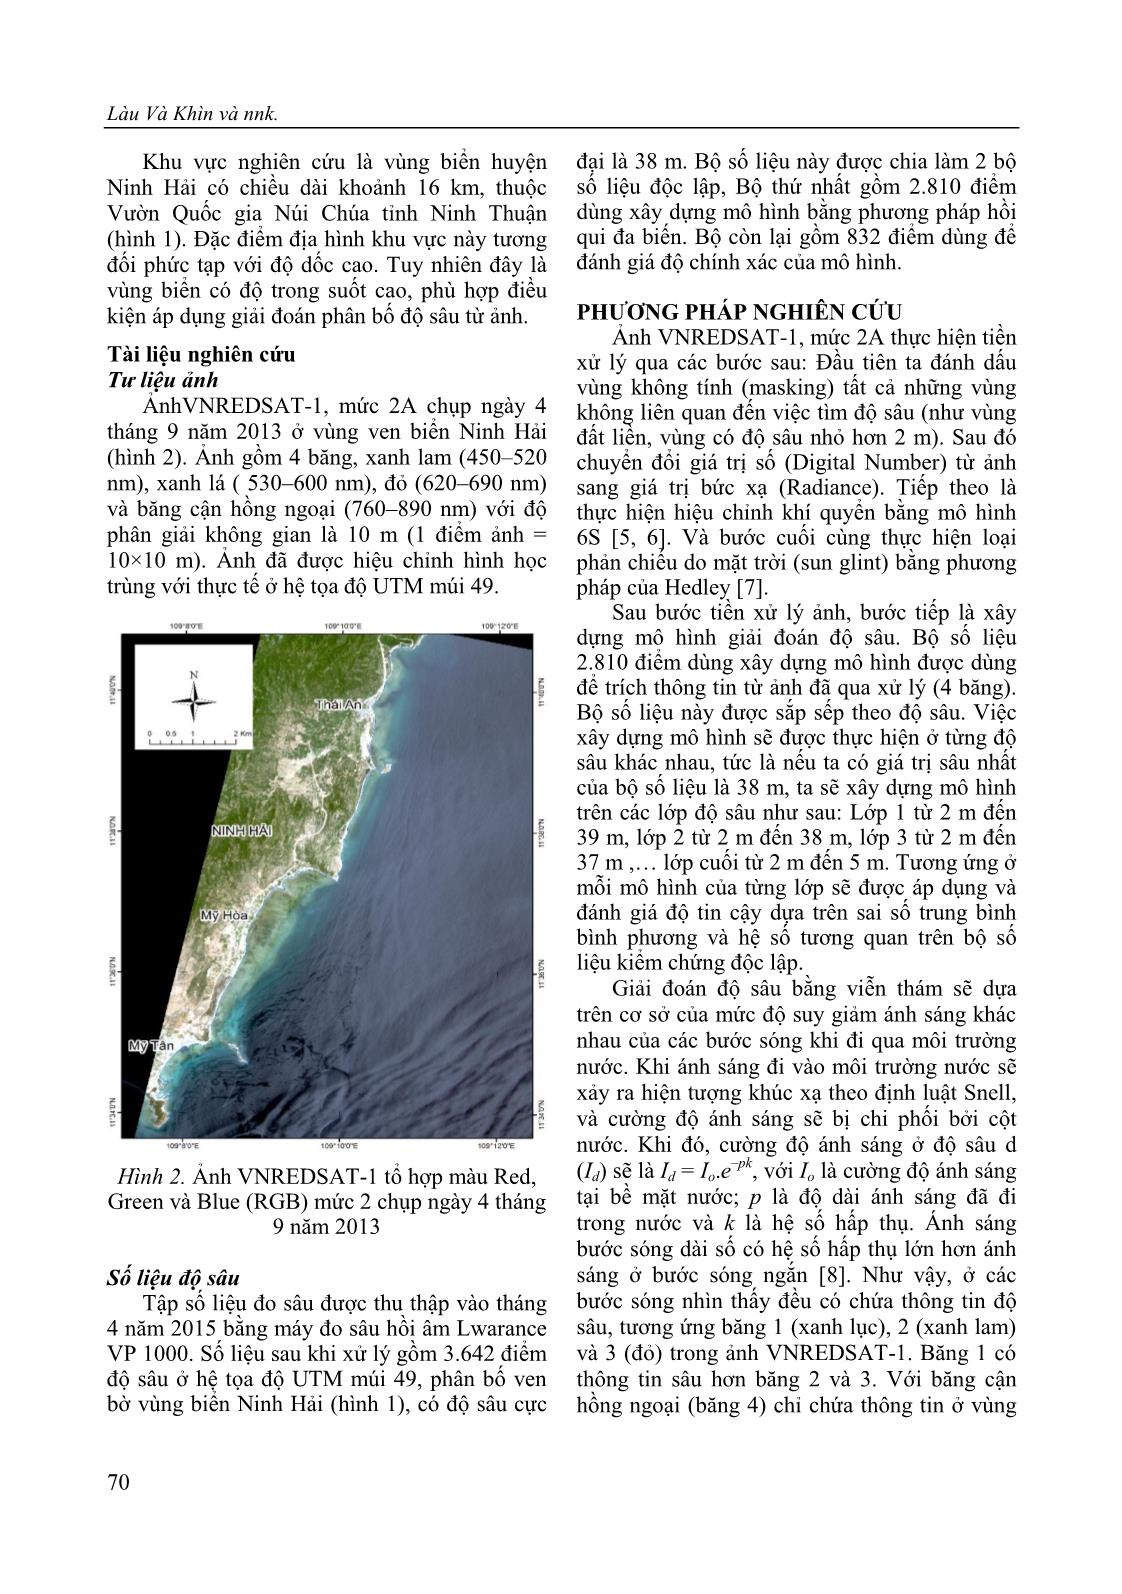 Bathymetry mapping using VNREDSAT-1 image: A case study in Ninh Hai coast, Ninh Thuan province of Vietnam trang 4